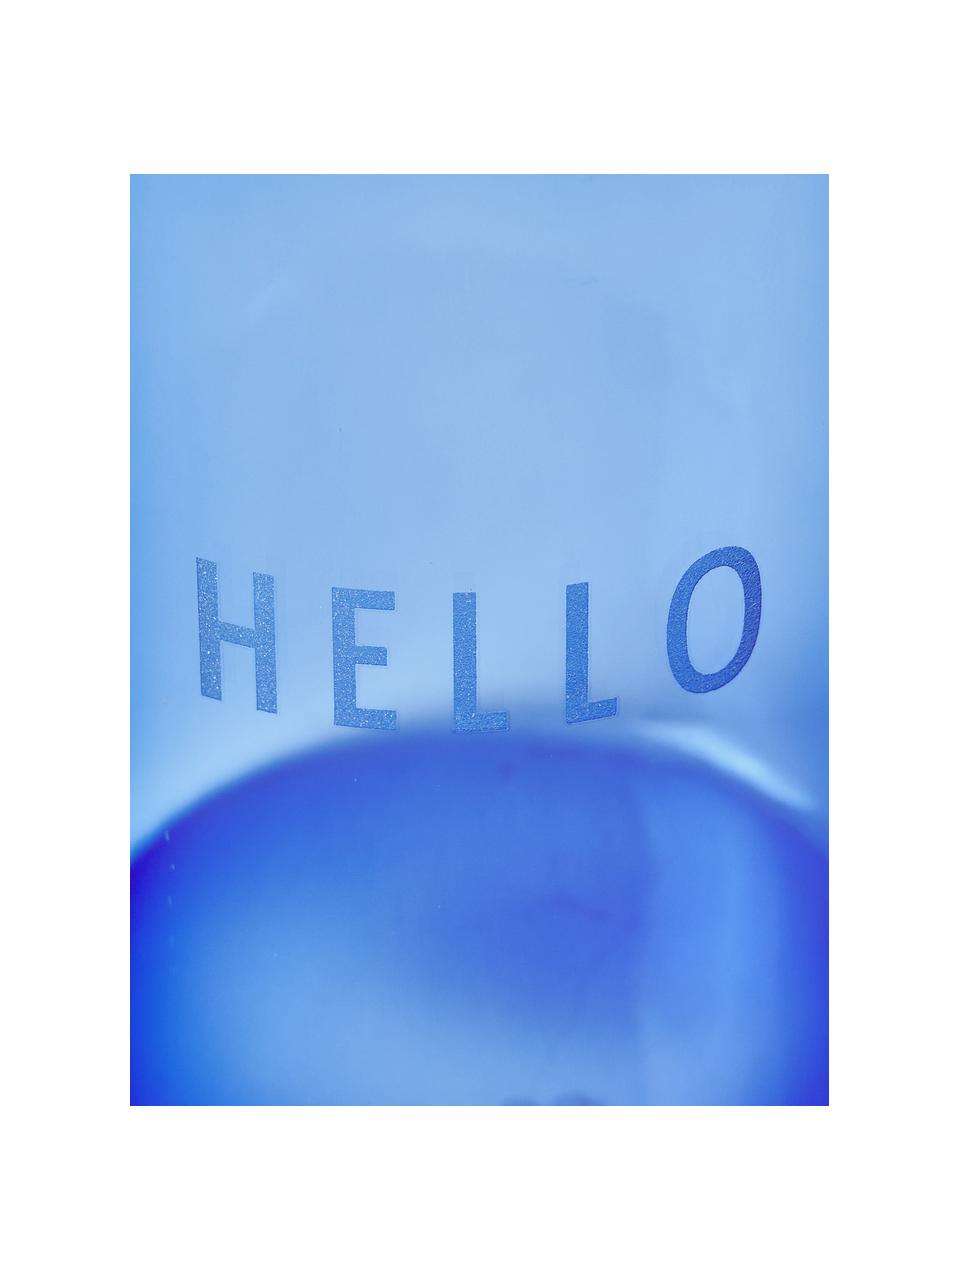 Verre à eau design Favorite HELLO, Verre borosilicate, Bleu (Hello), Ø 8 x haut. 11 cm, 350 ml